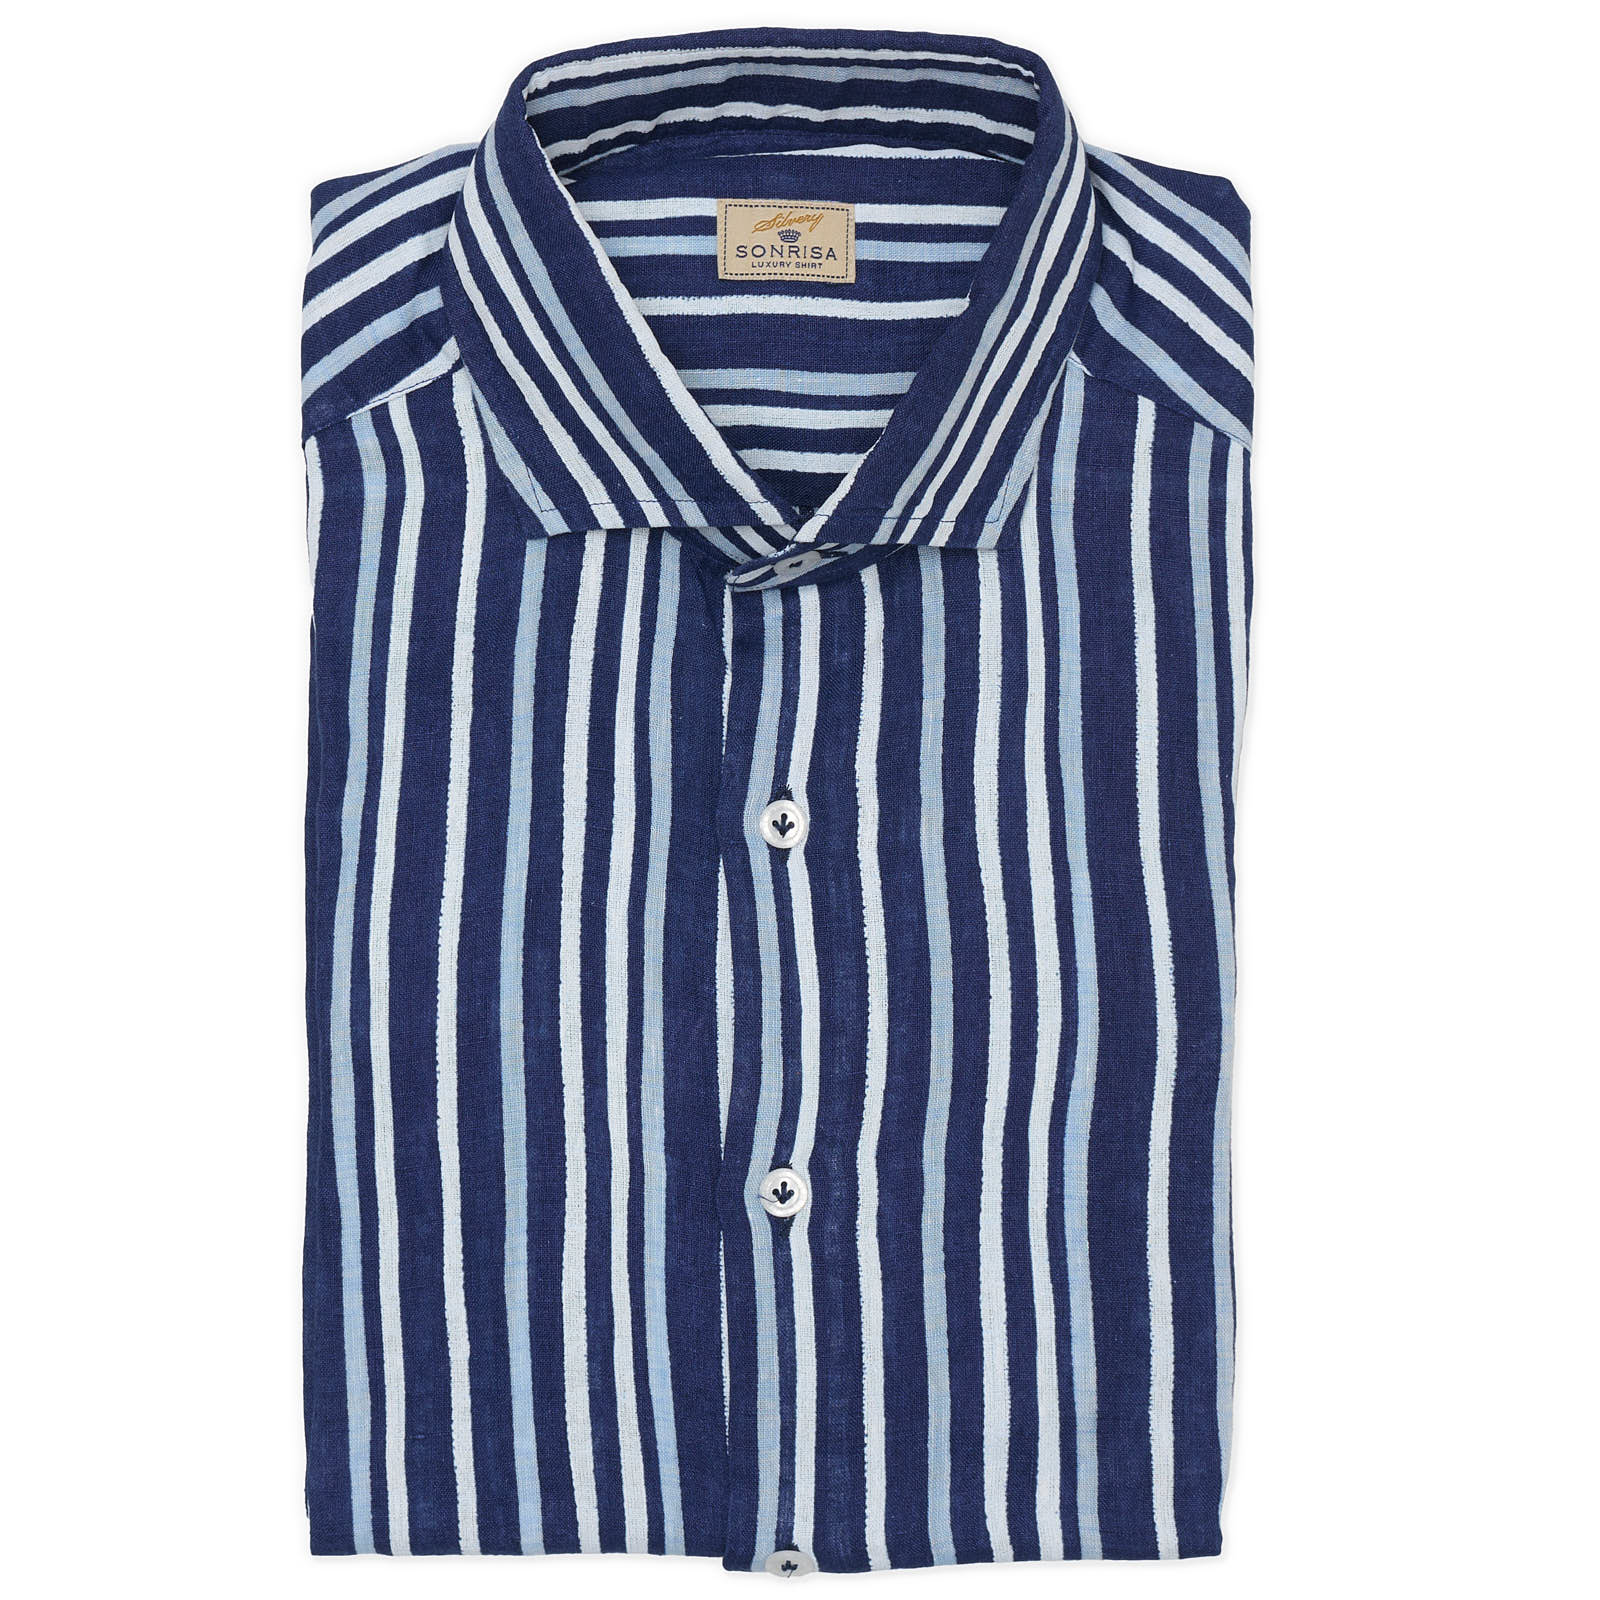 SONRISA Milano Navy Blue Striped Linen Dress Shirt EU 39 NEW US 15.5